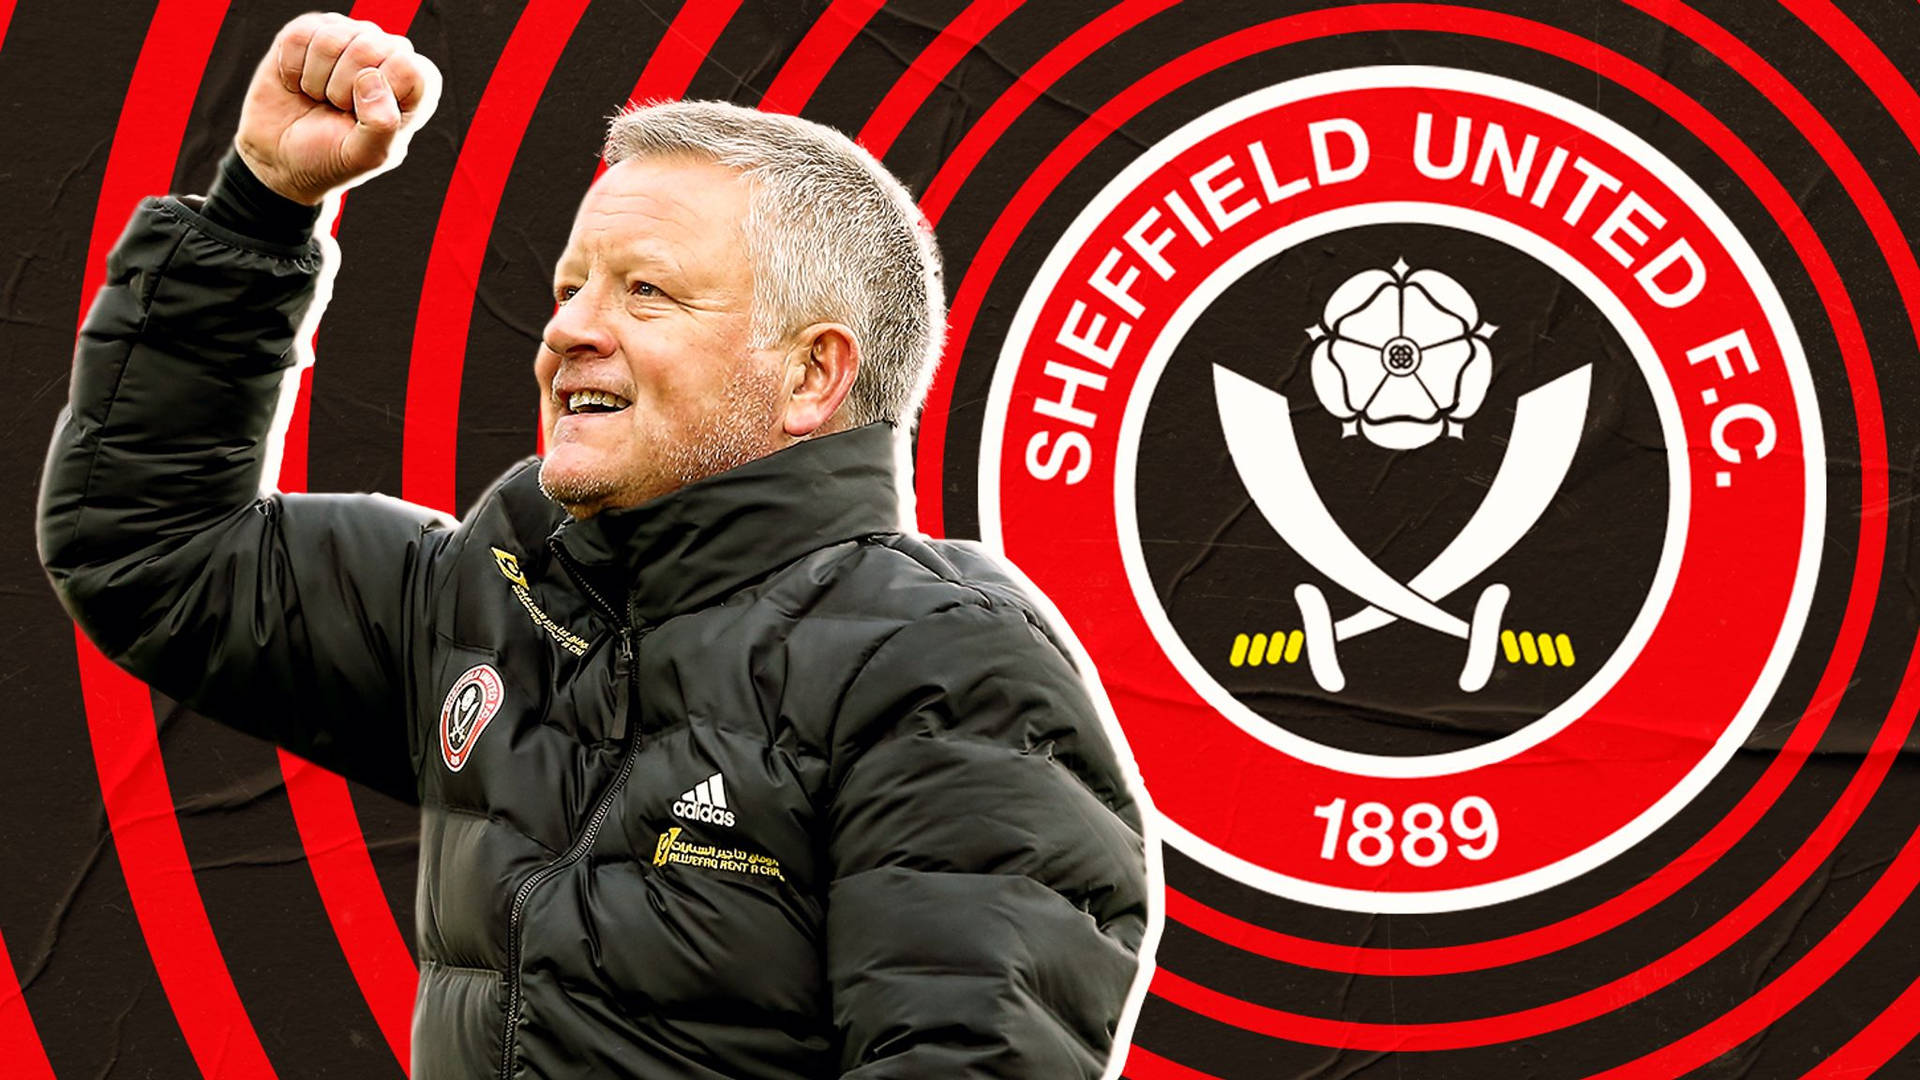 Sheffield United Manager Chris Wilder